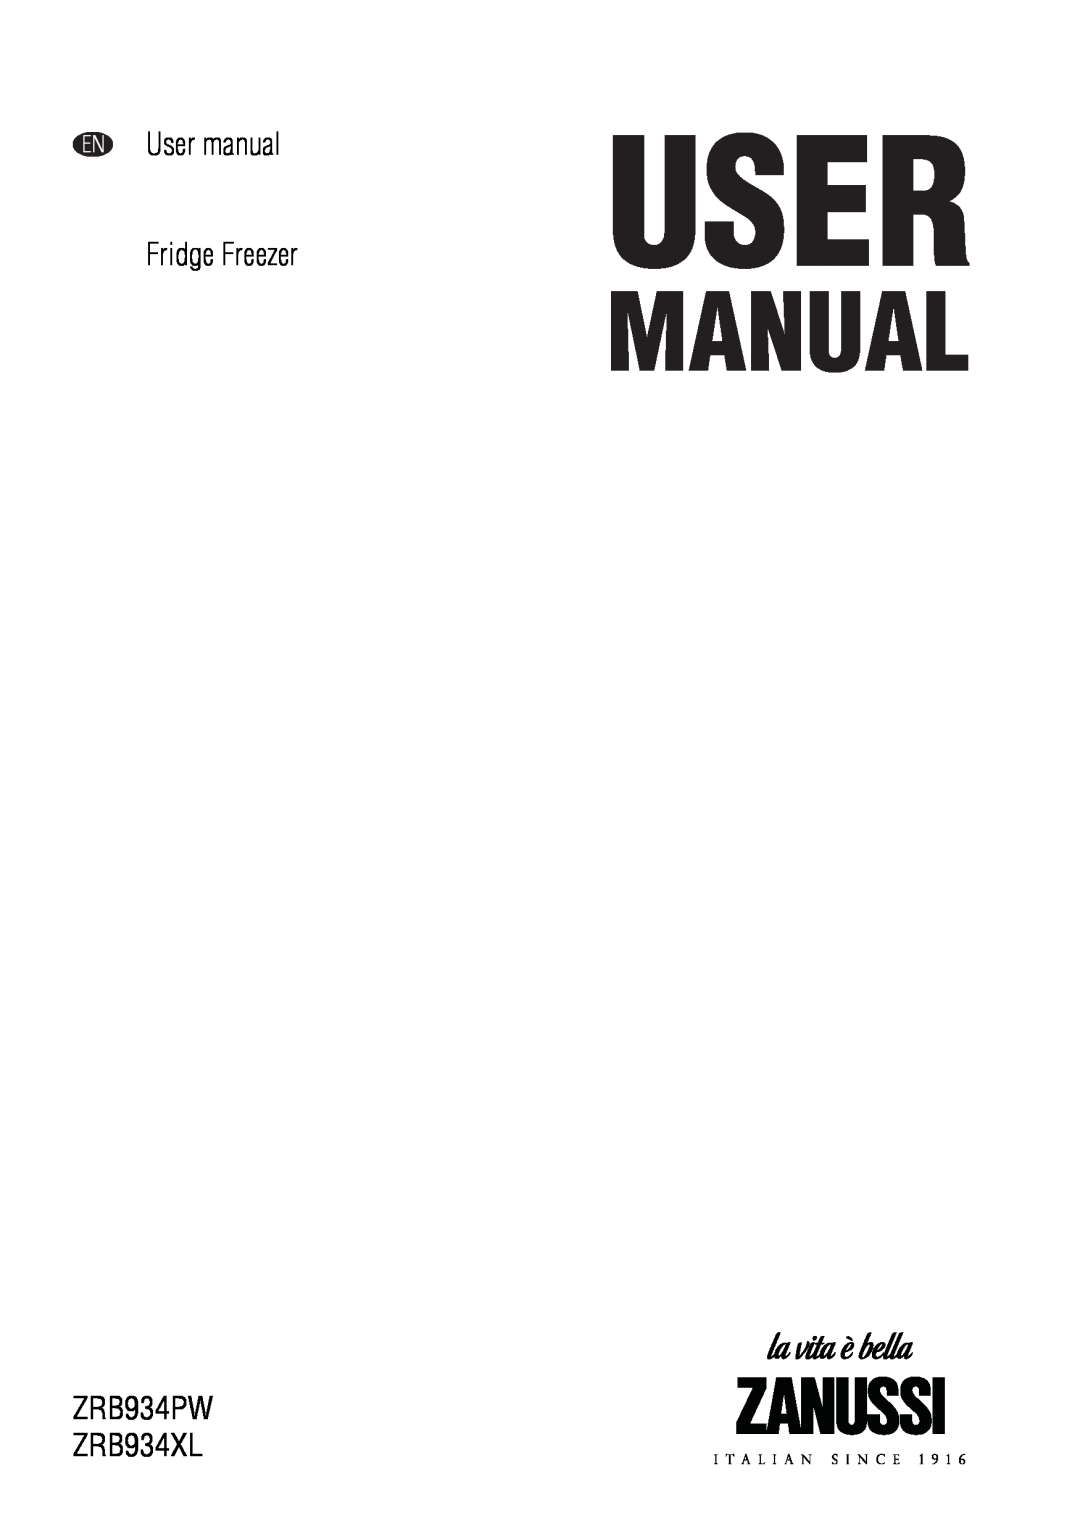 Zanussi user manual Fridge Freezer, ZRB934PW ZRB934XL 